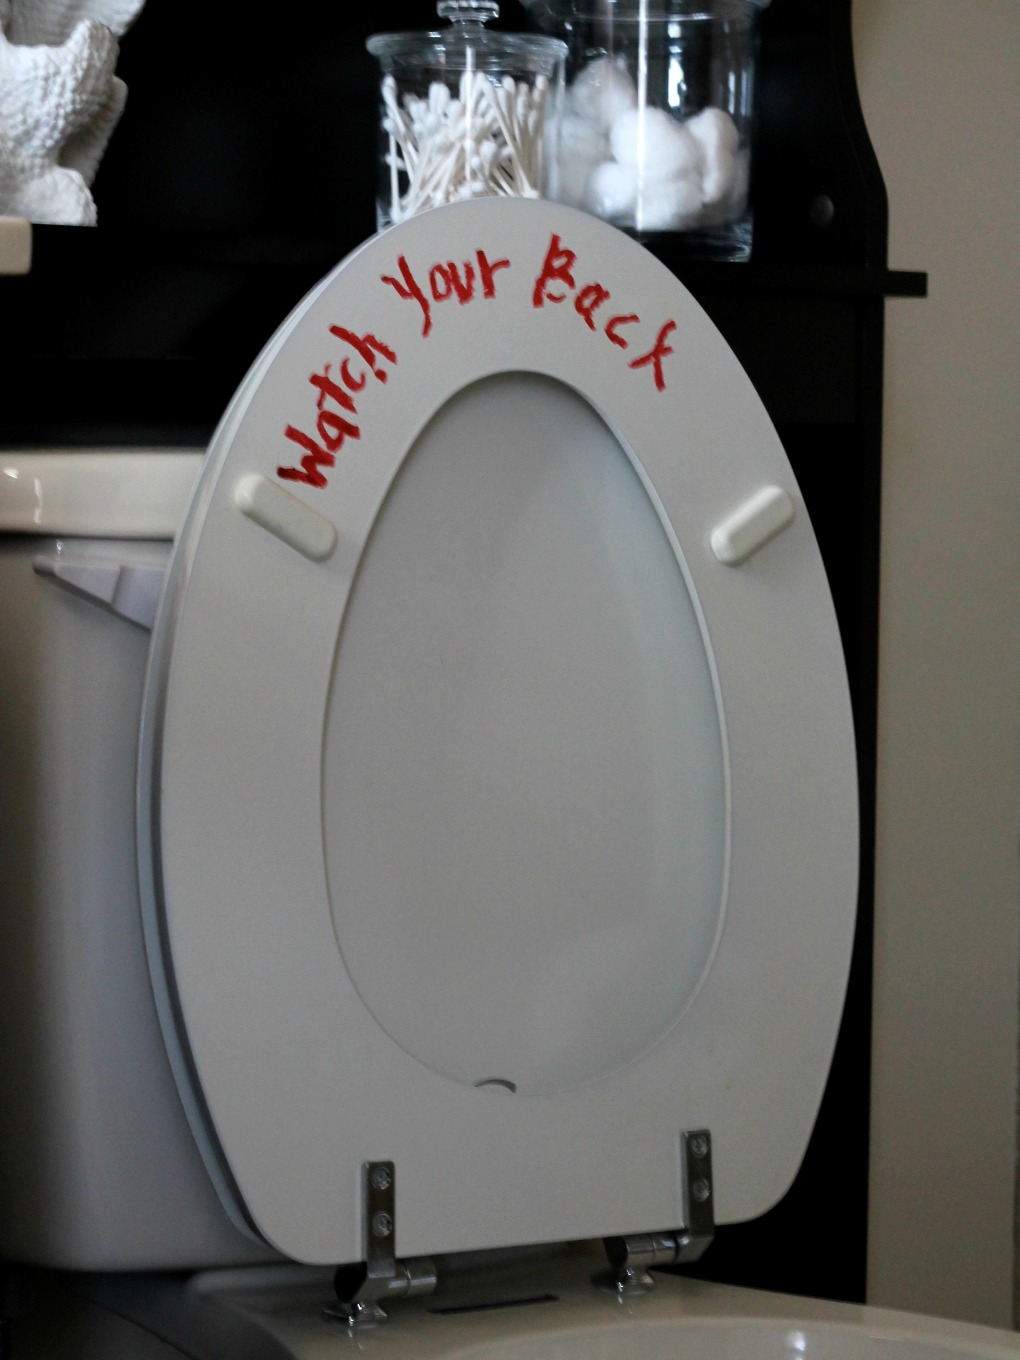 Halloween Decor toilet message